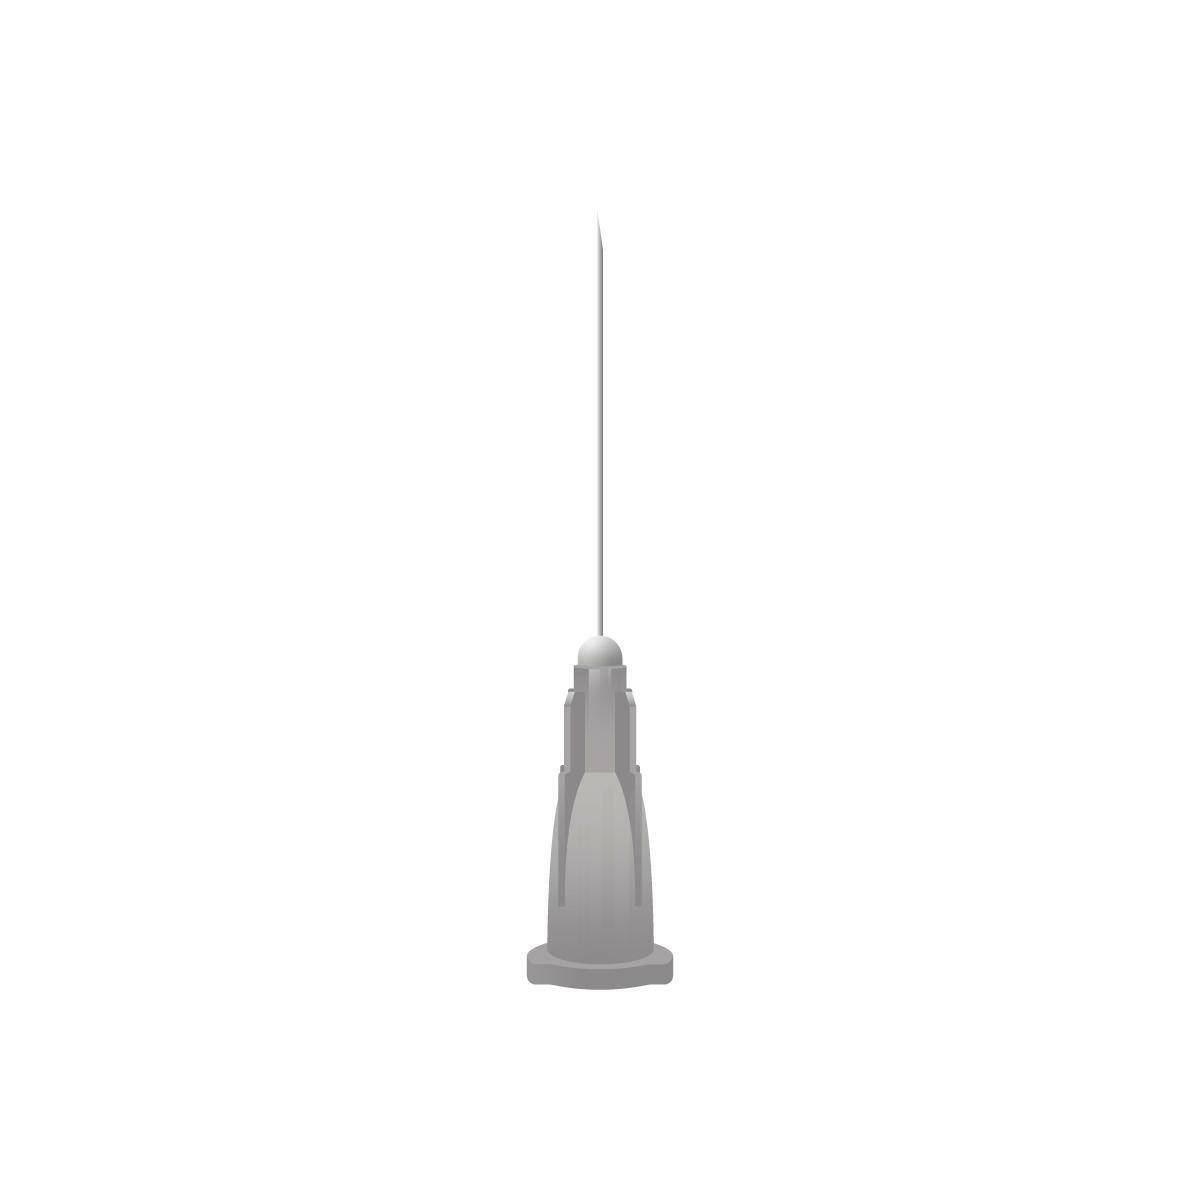 27g Grey 0.5 inch BD Microlance Needles